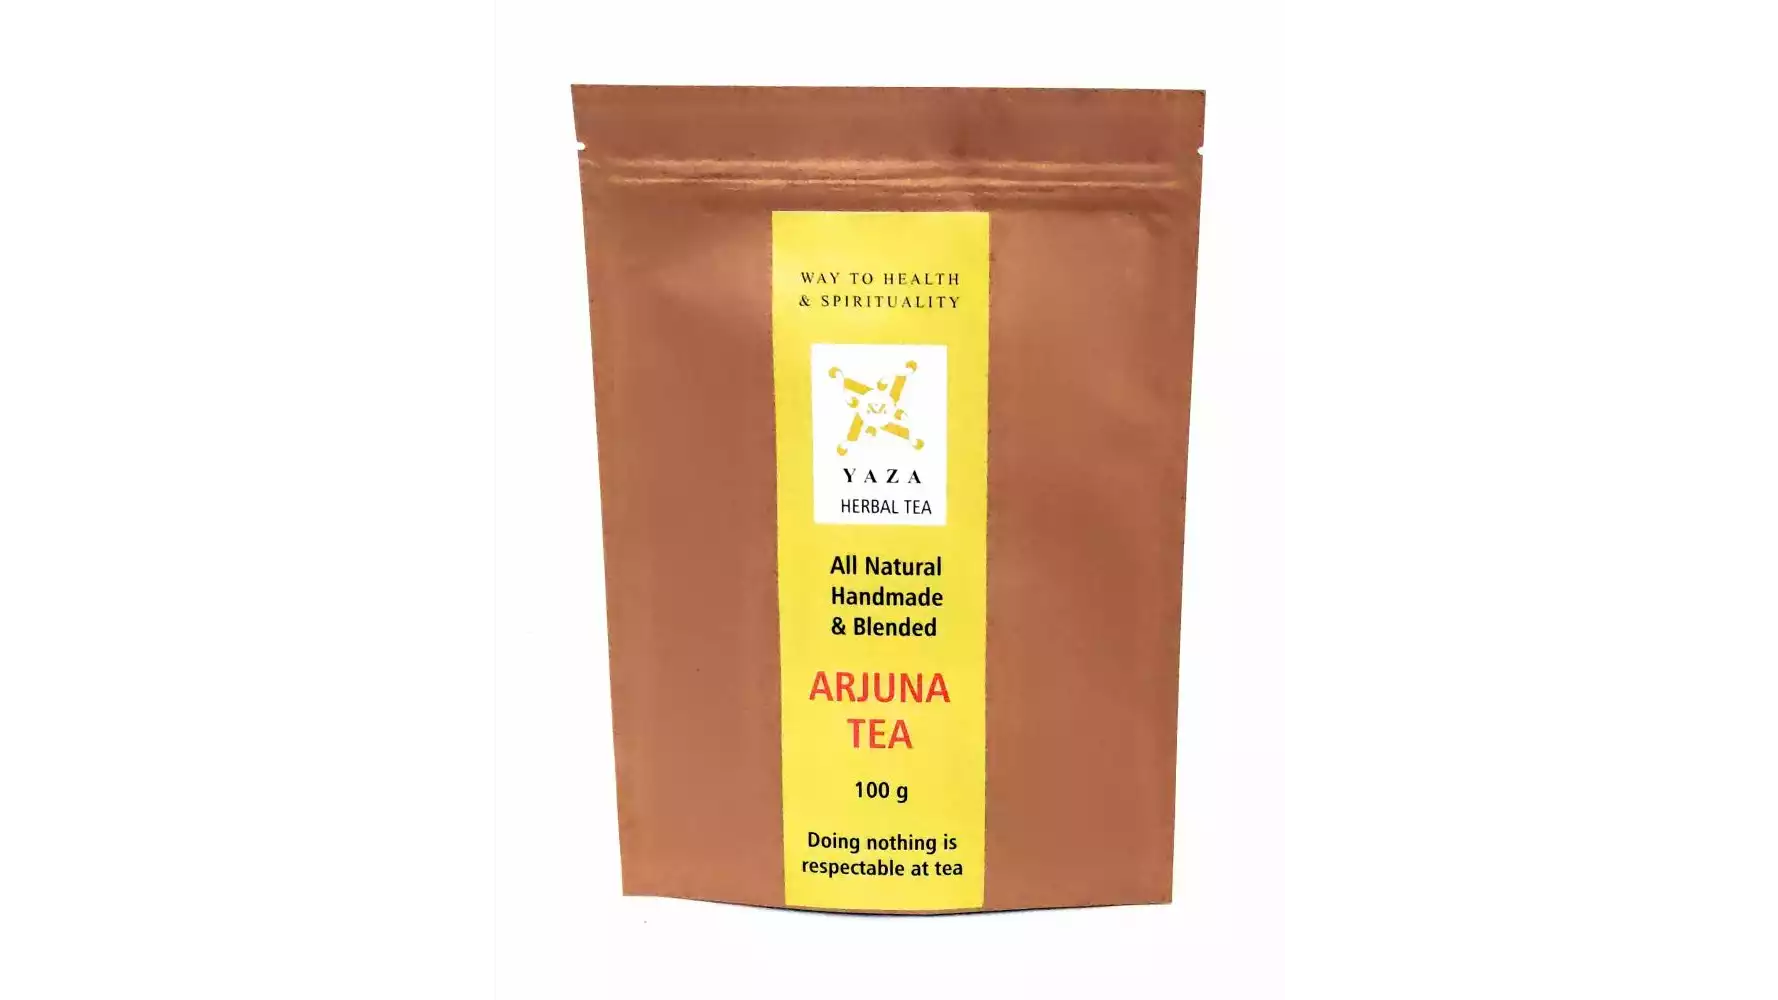 Yaza Arjuna Tea (100g)